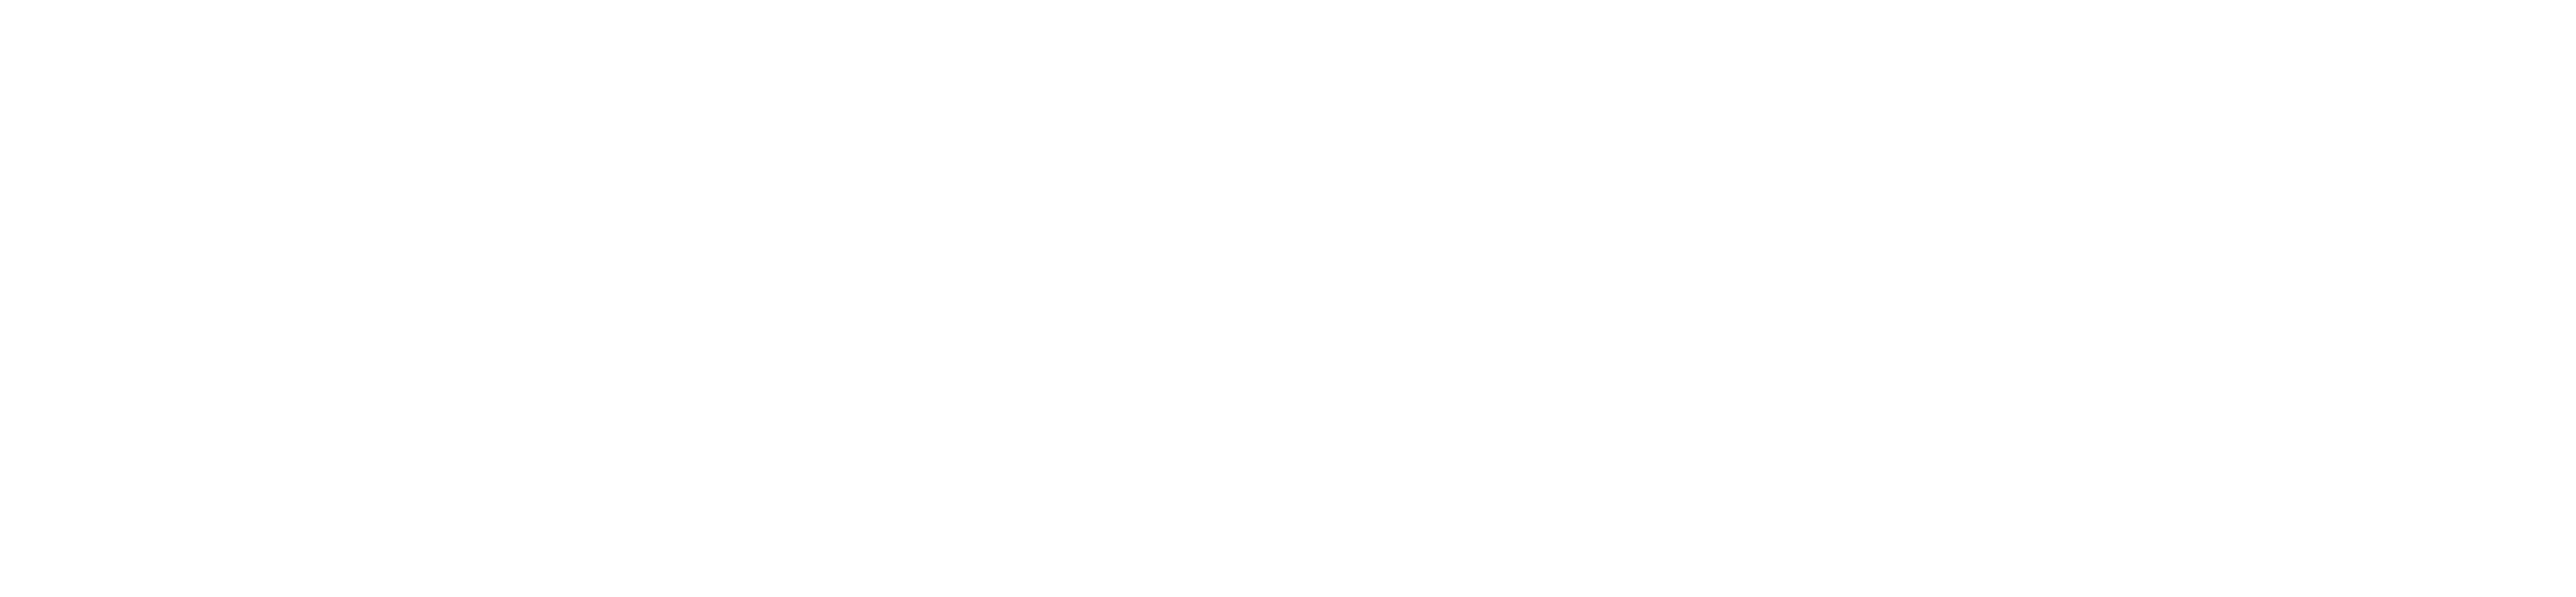 Luxury hotels - Lartisien